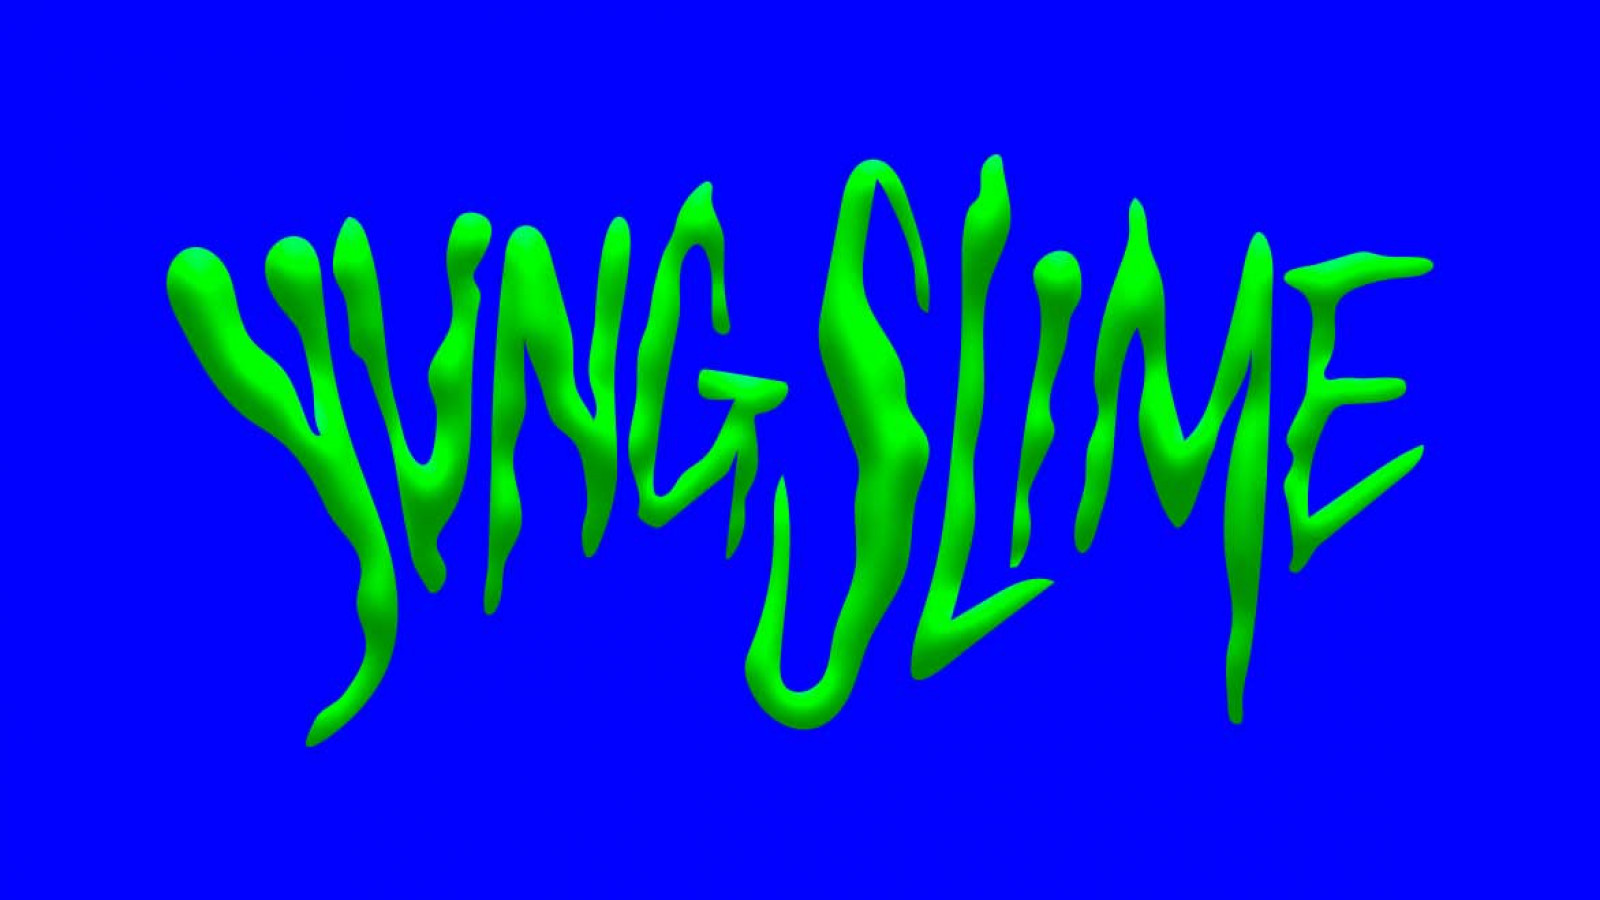 Yung Slime